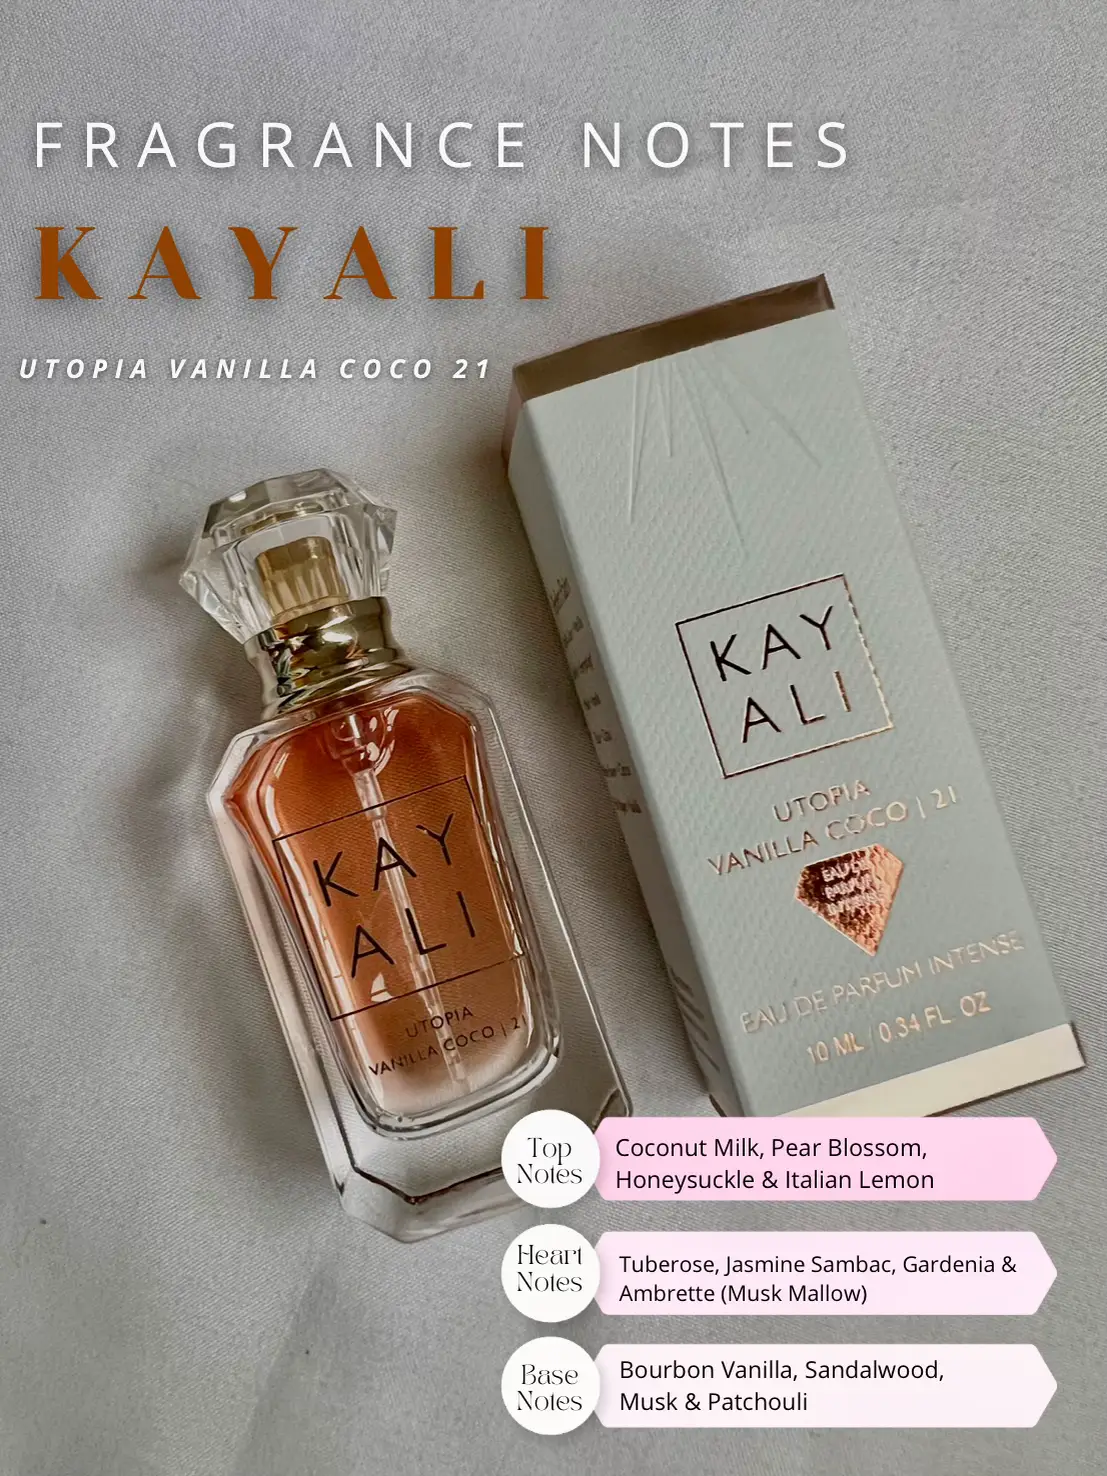 KAYALI Utopia Vanilla Coco  FRAGRANCE REVIEW 